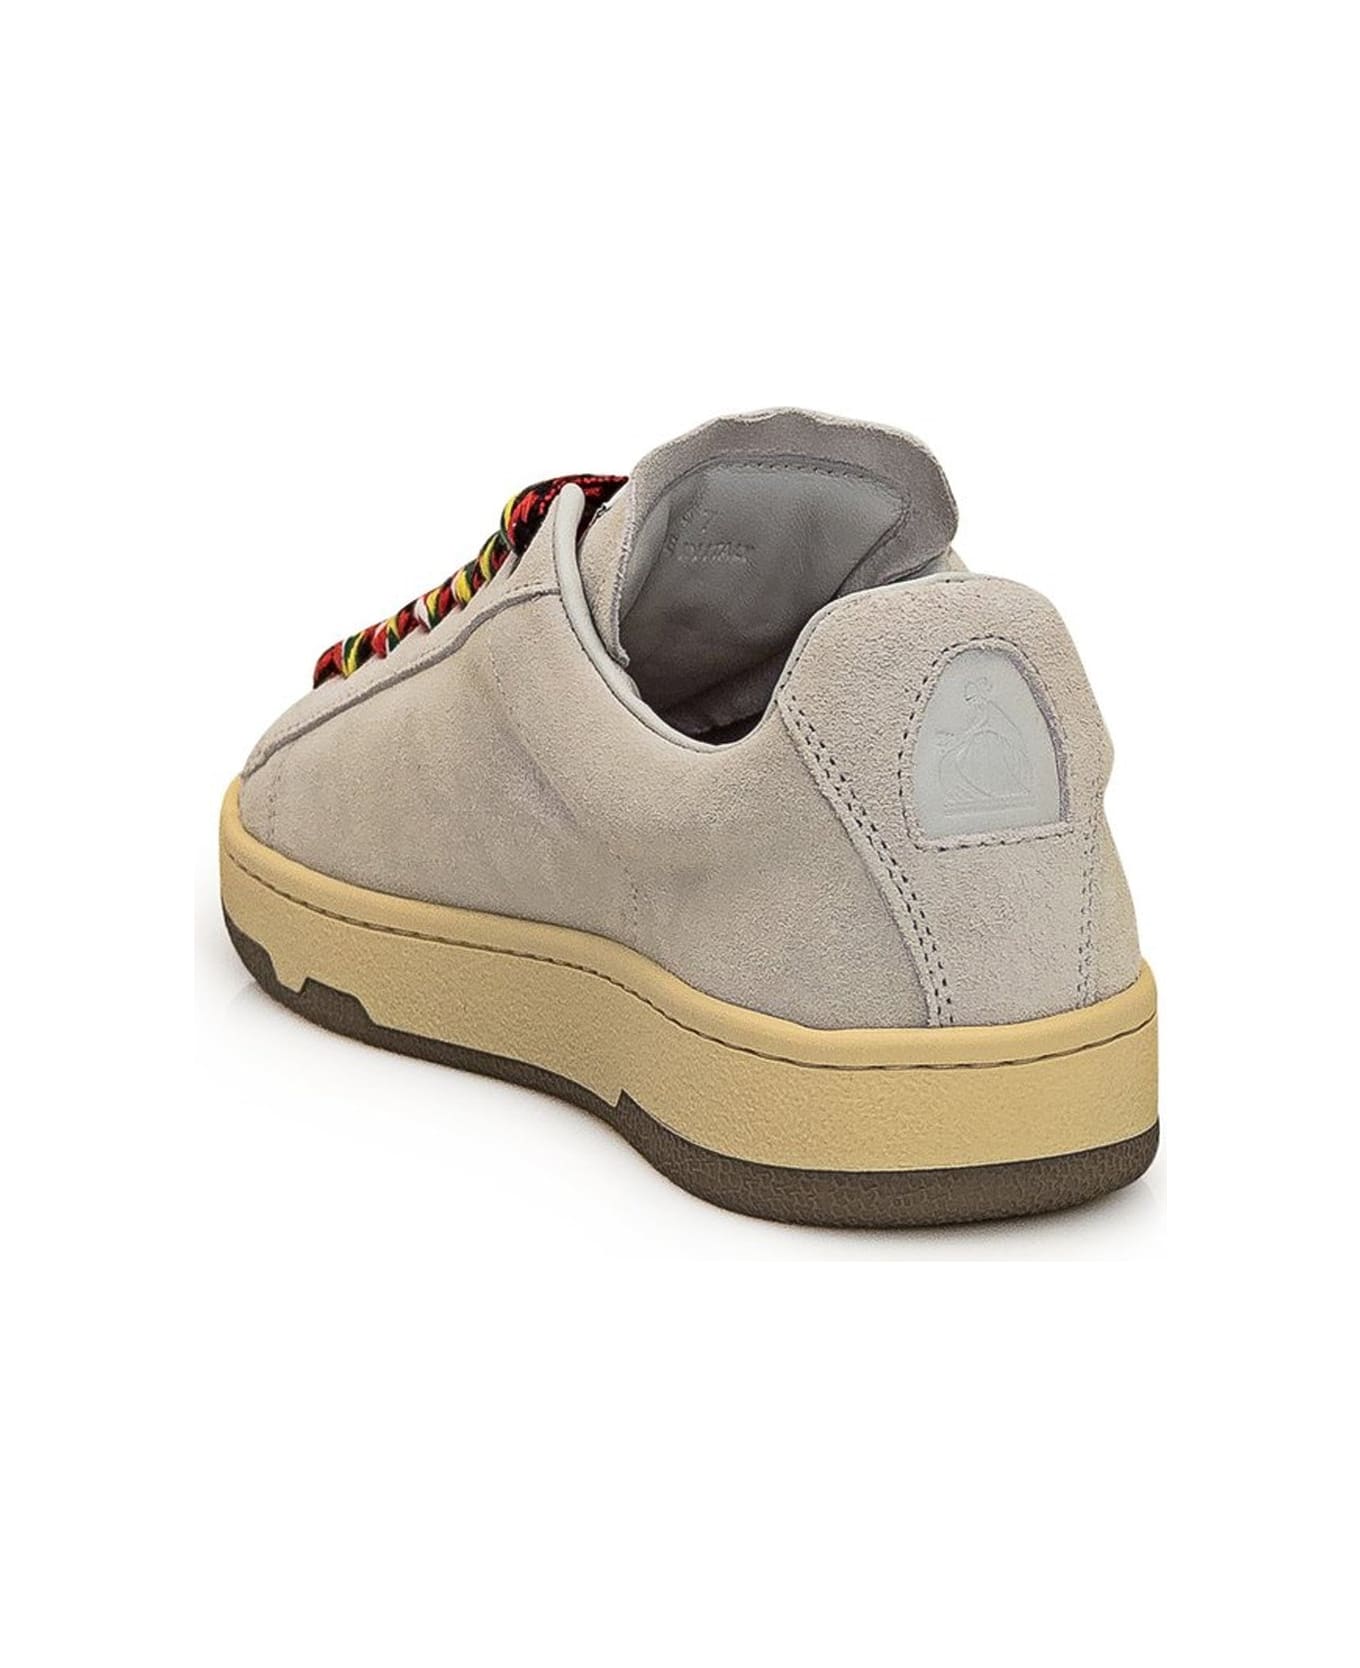 Lanvin Curb Sneakers - Gray スニーカー